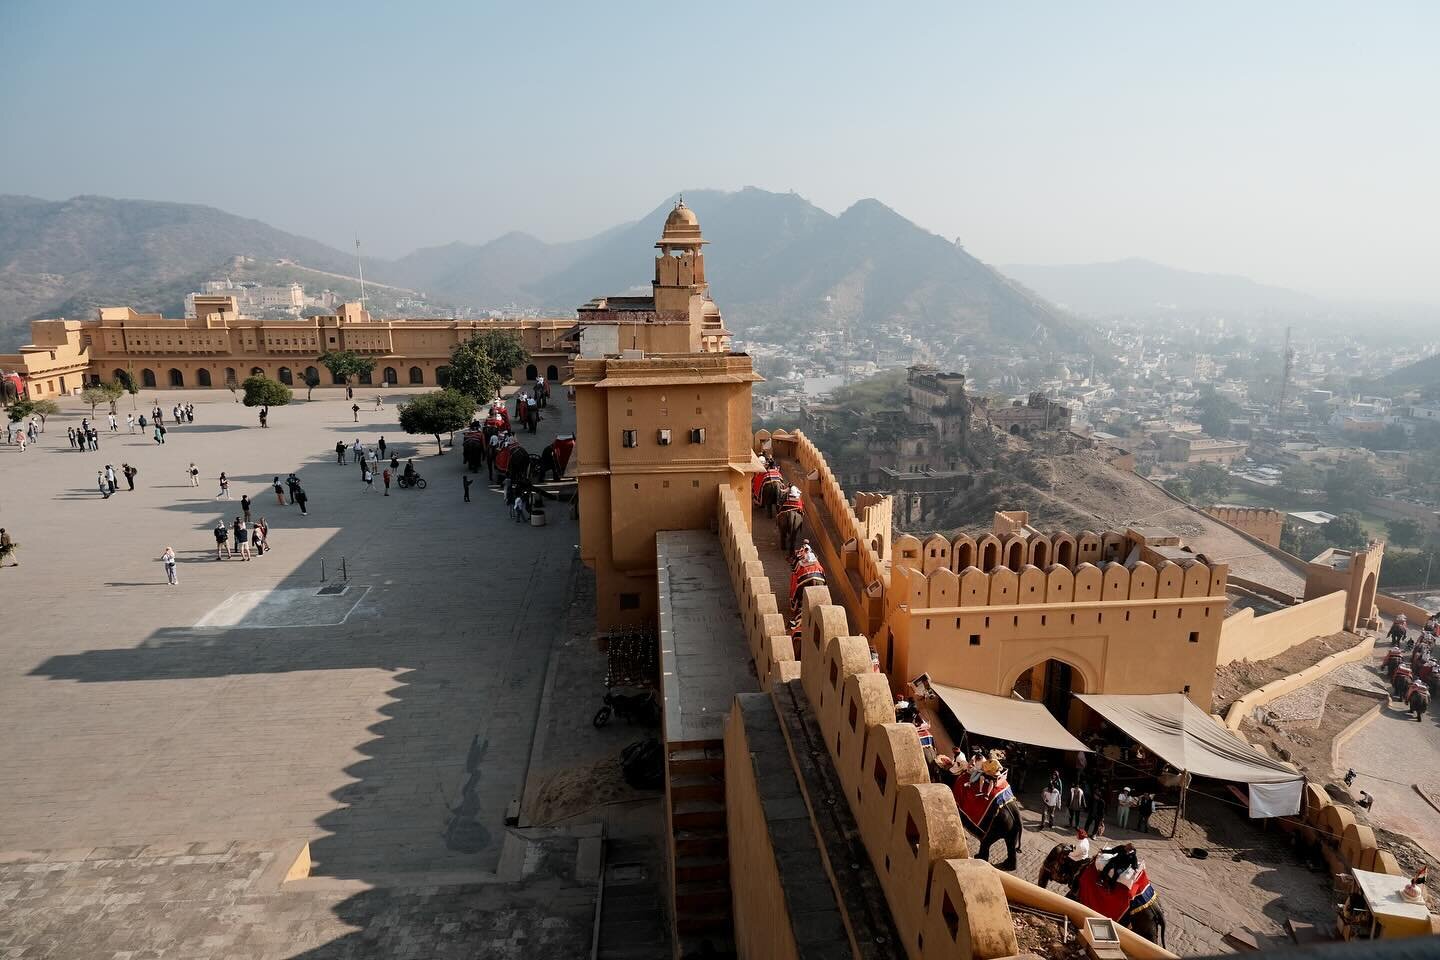 Horizontal at the Amber Fort, India | Rinpung Dzong, Bhutan | Sultan Qaboos Grand Mosque, Oman | Bangkok klongs